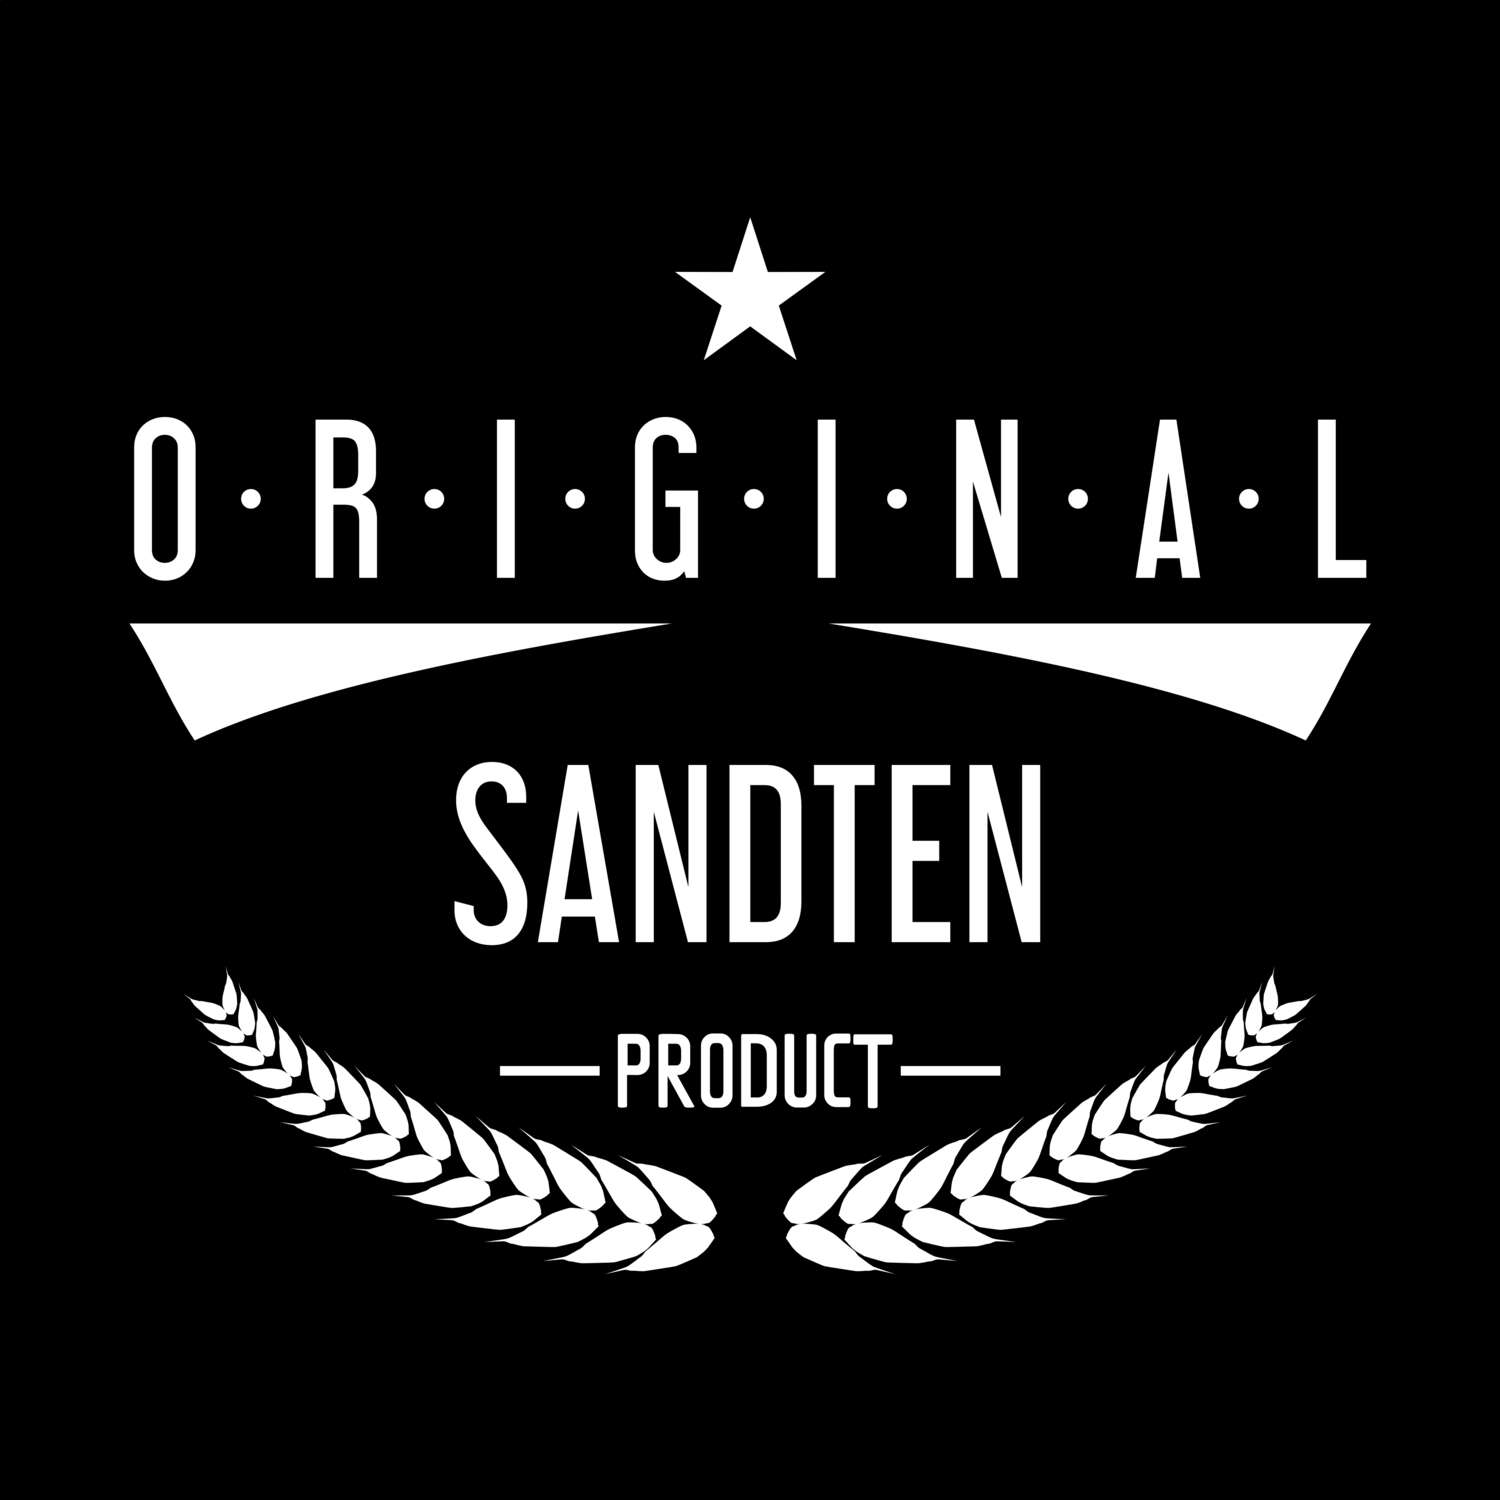 Sandten T-Shirt »Original Product«